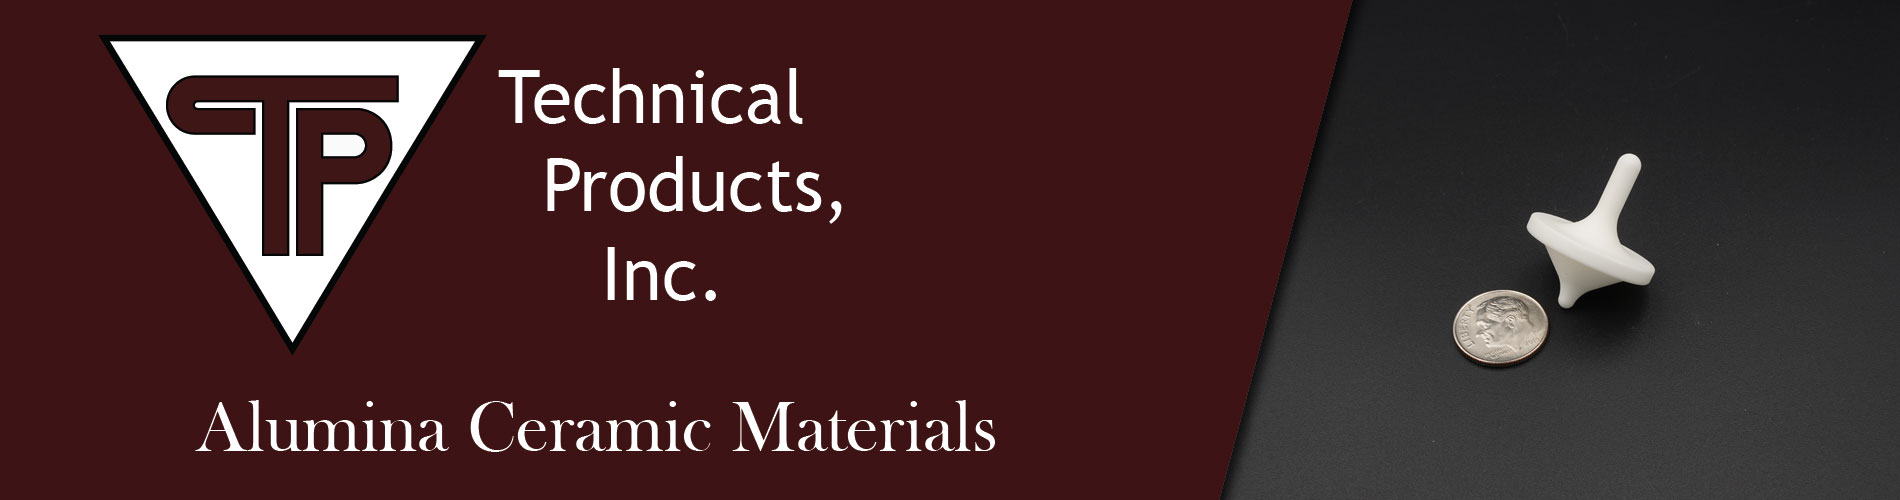 Alumina Ceramic Materials -Technical Products, Inc.